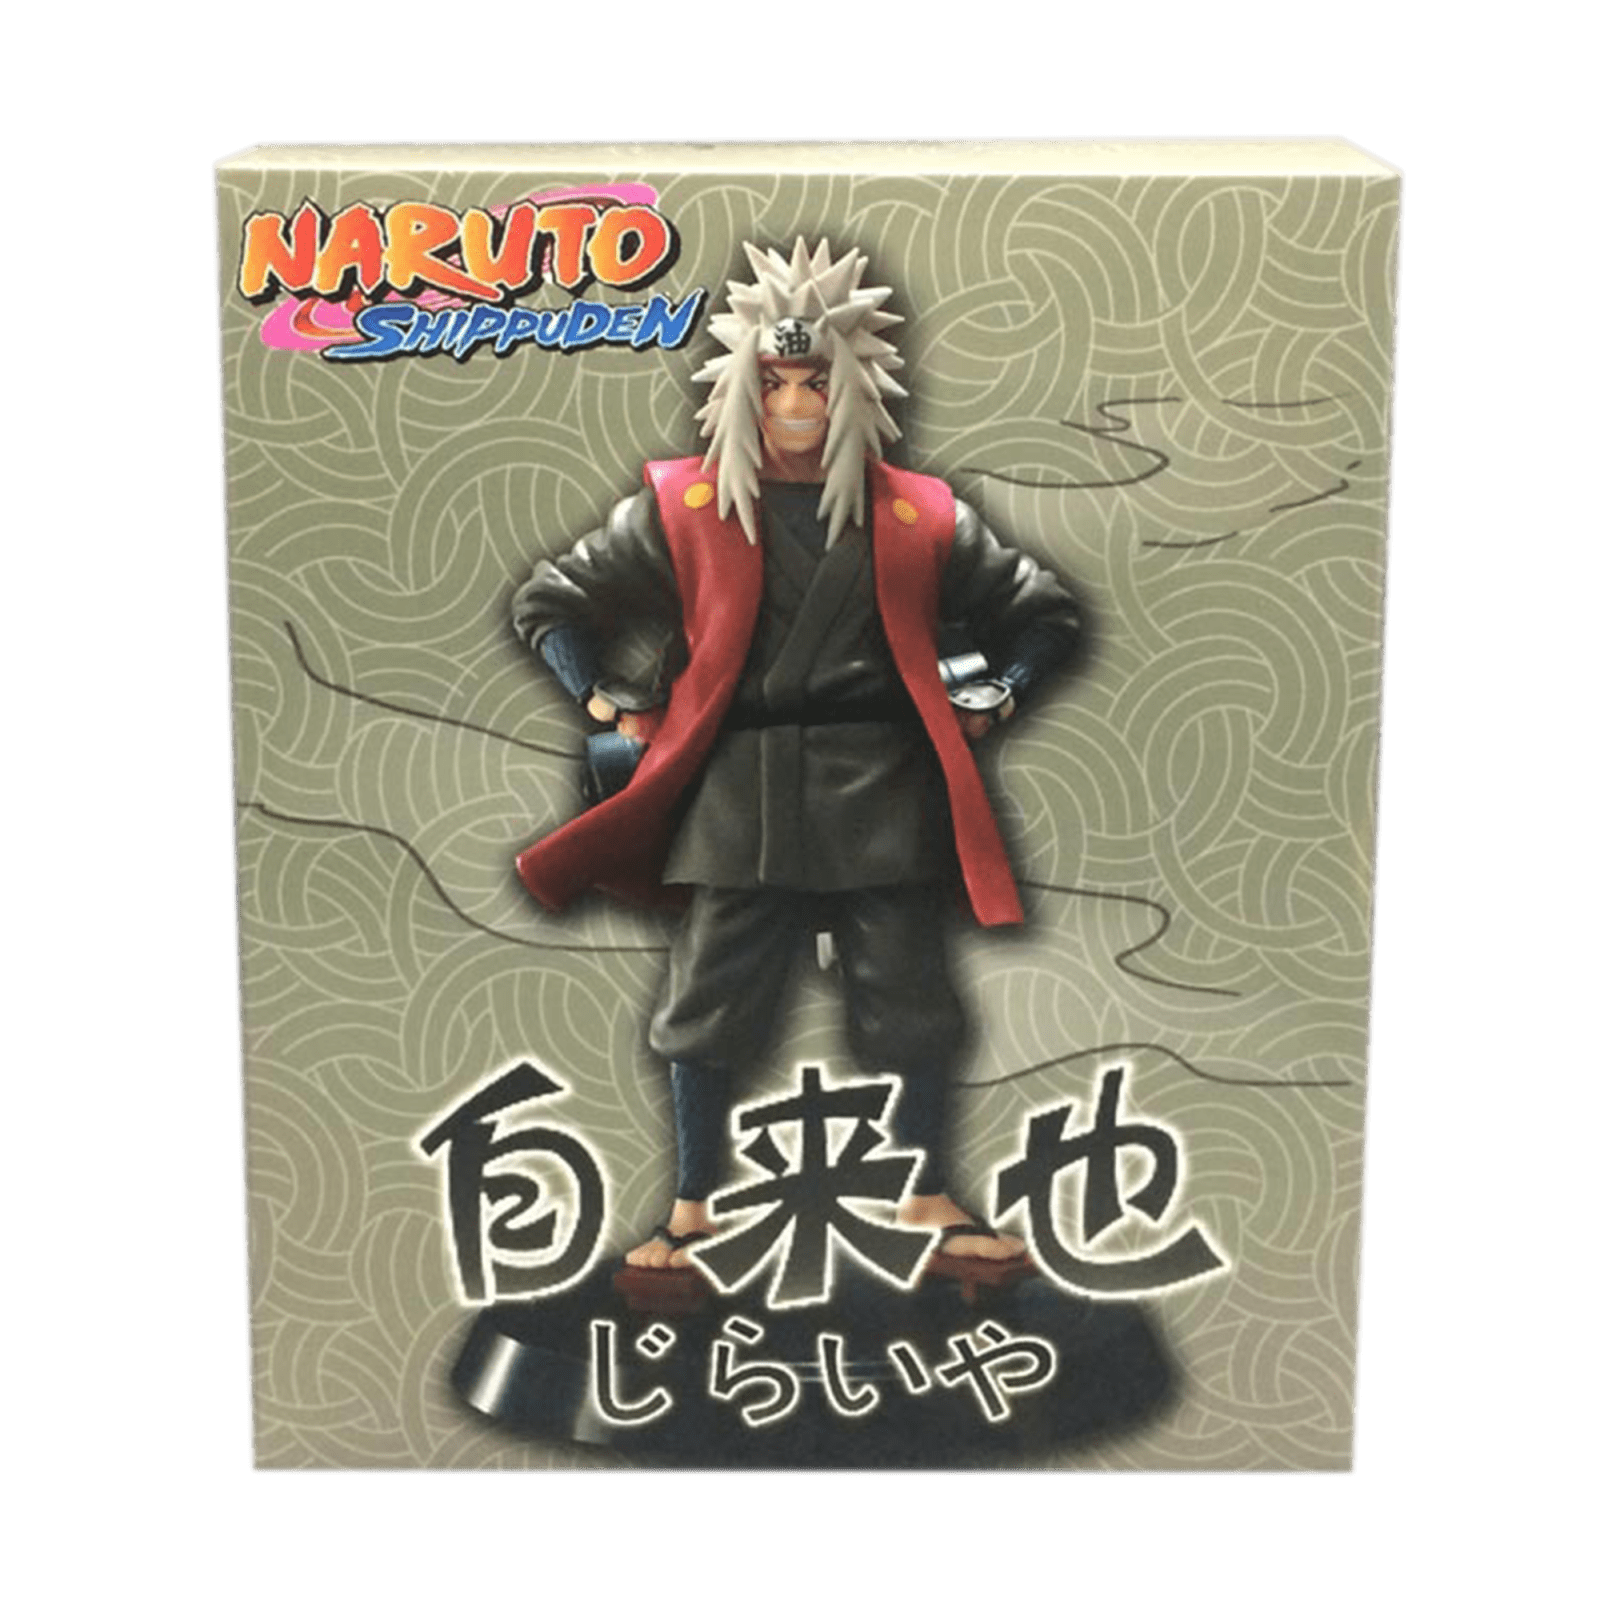 Toynami Naruto Shippuden Gaara Deluxe 6 Inch Figure 6"statue 11790 for sale online 